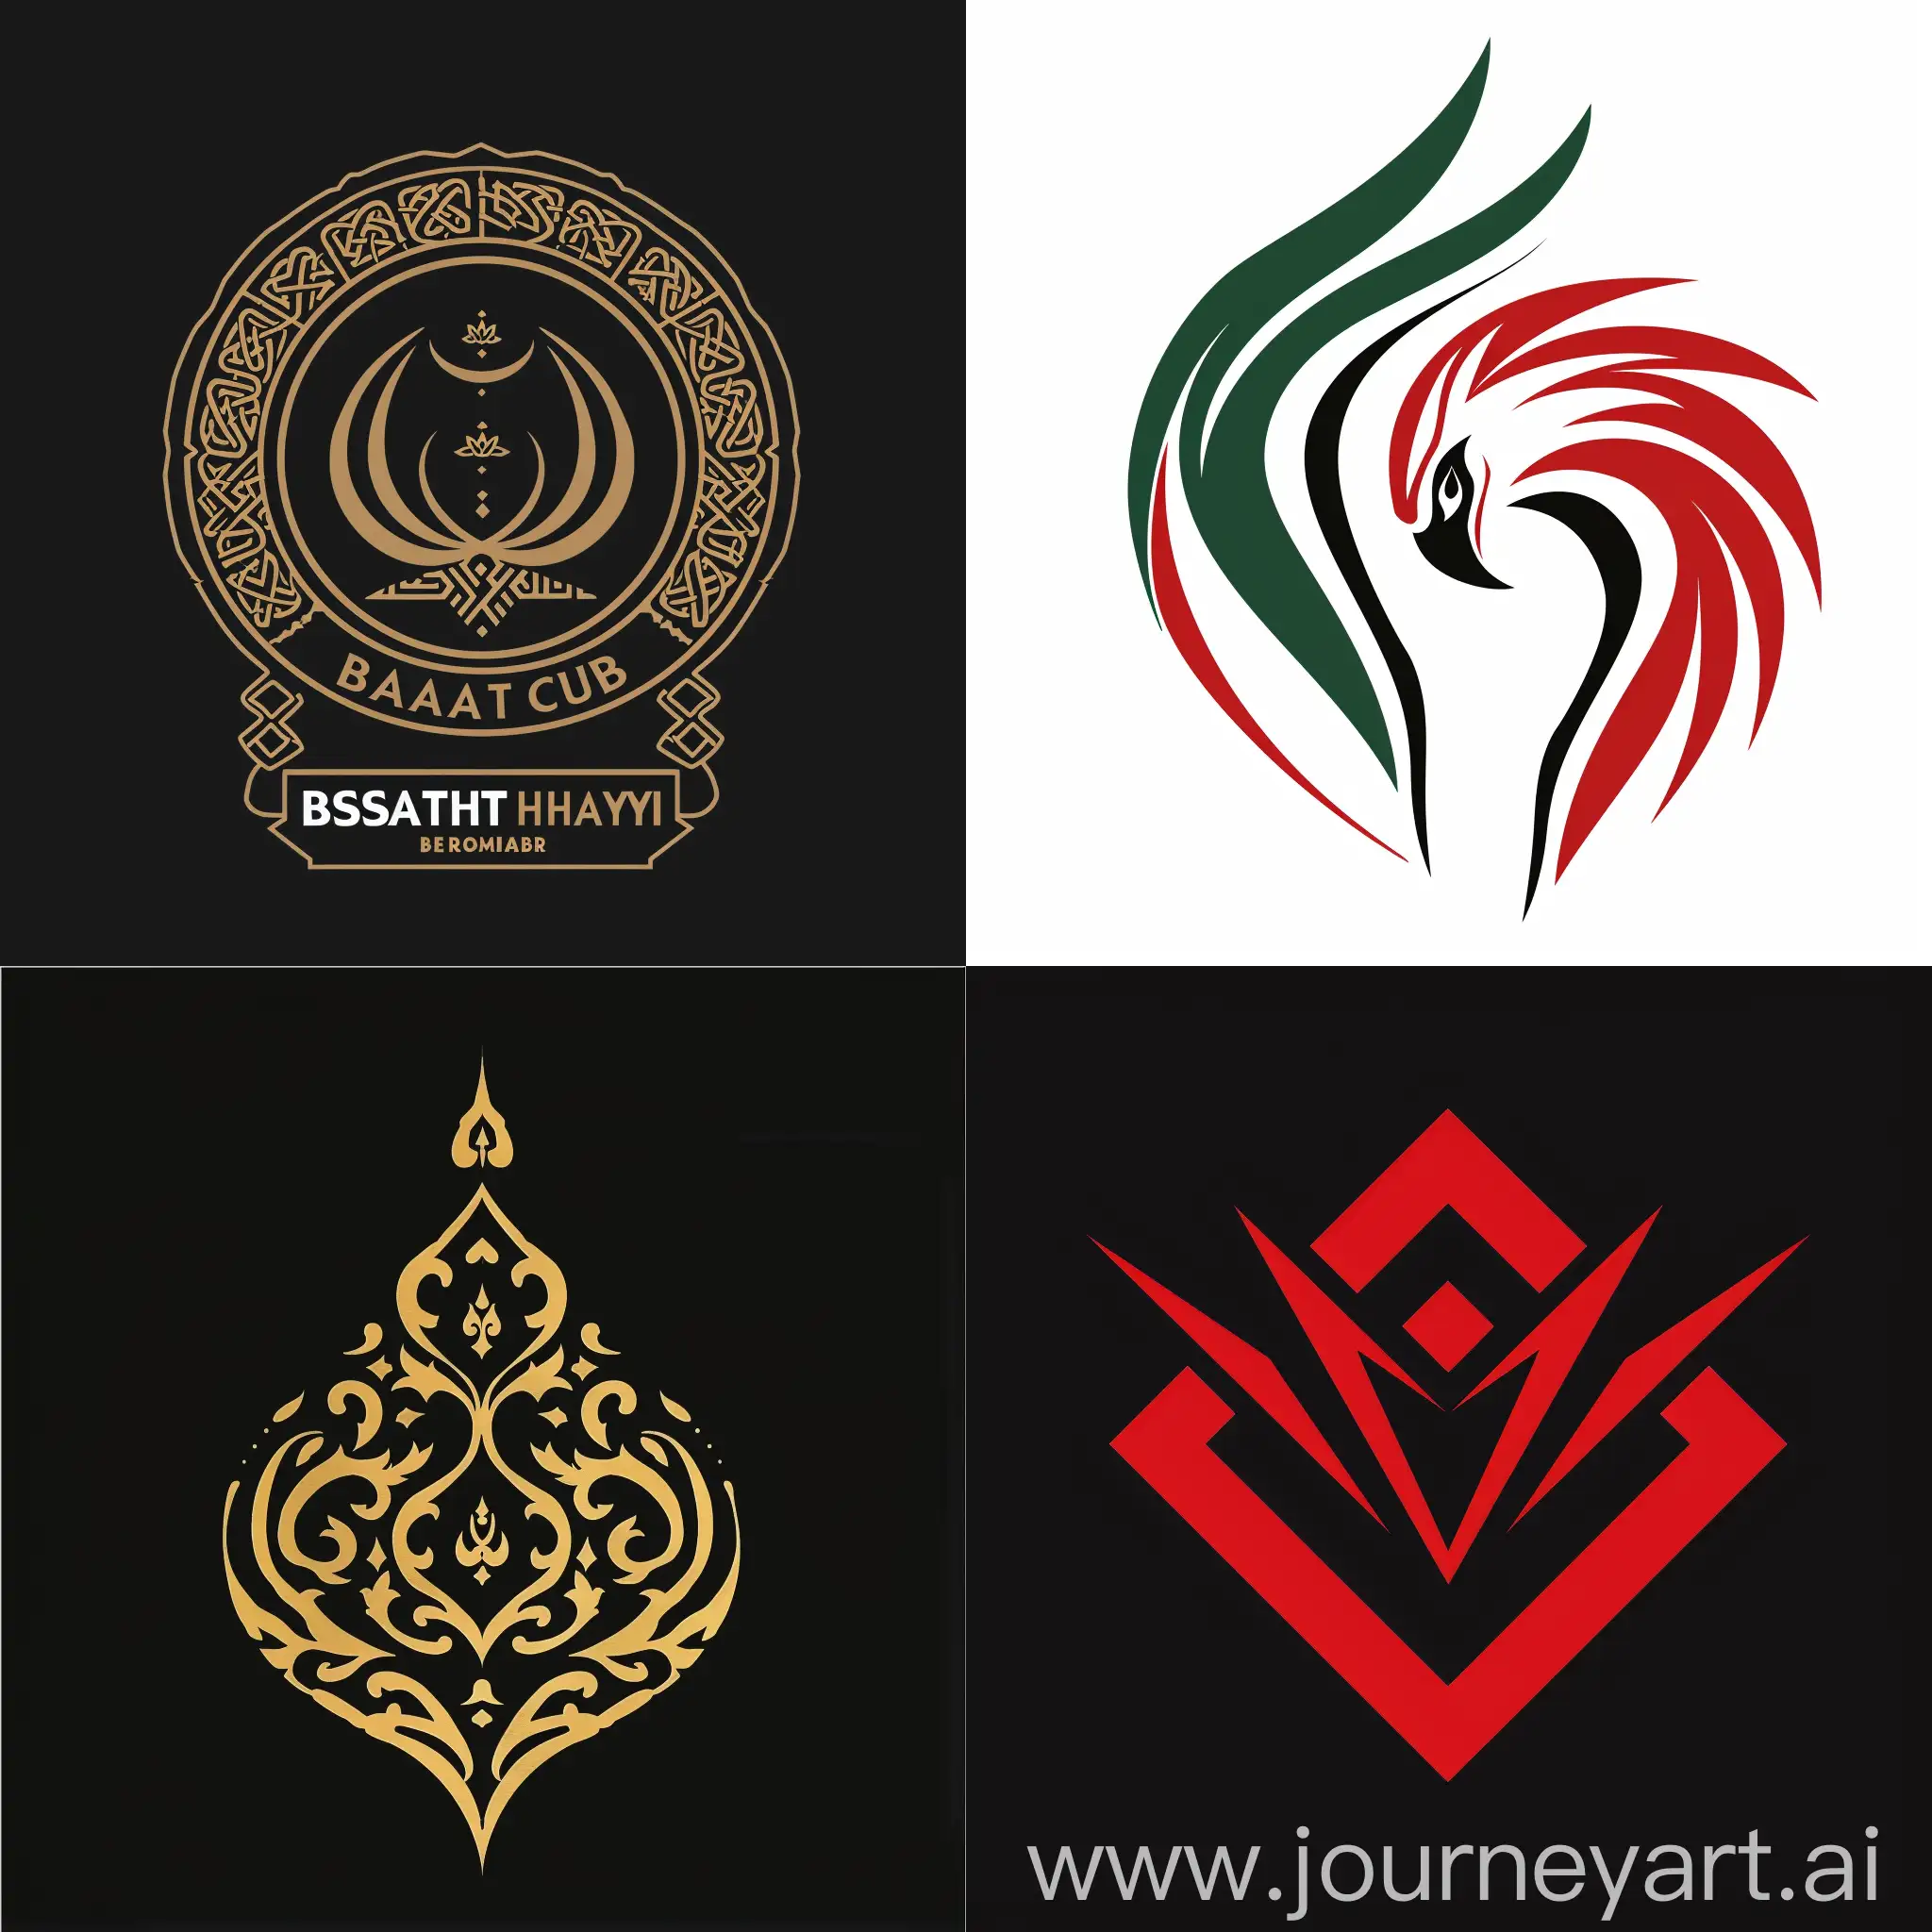 Basmat-Khayr-Club-Logo-with-Vibrant-Colors